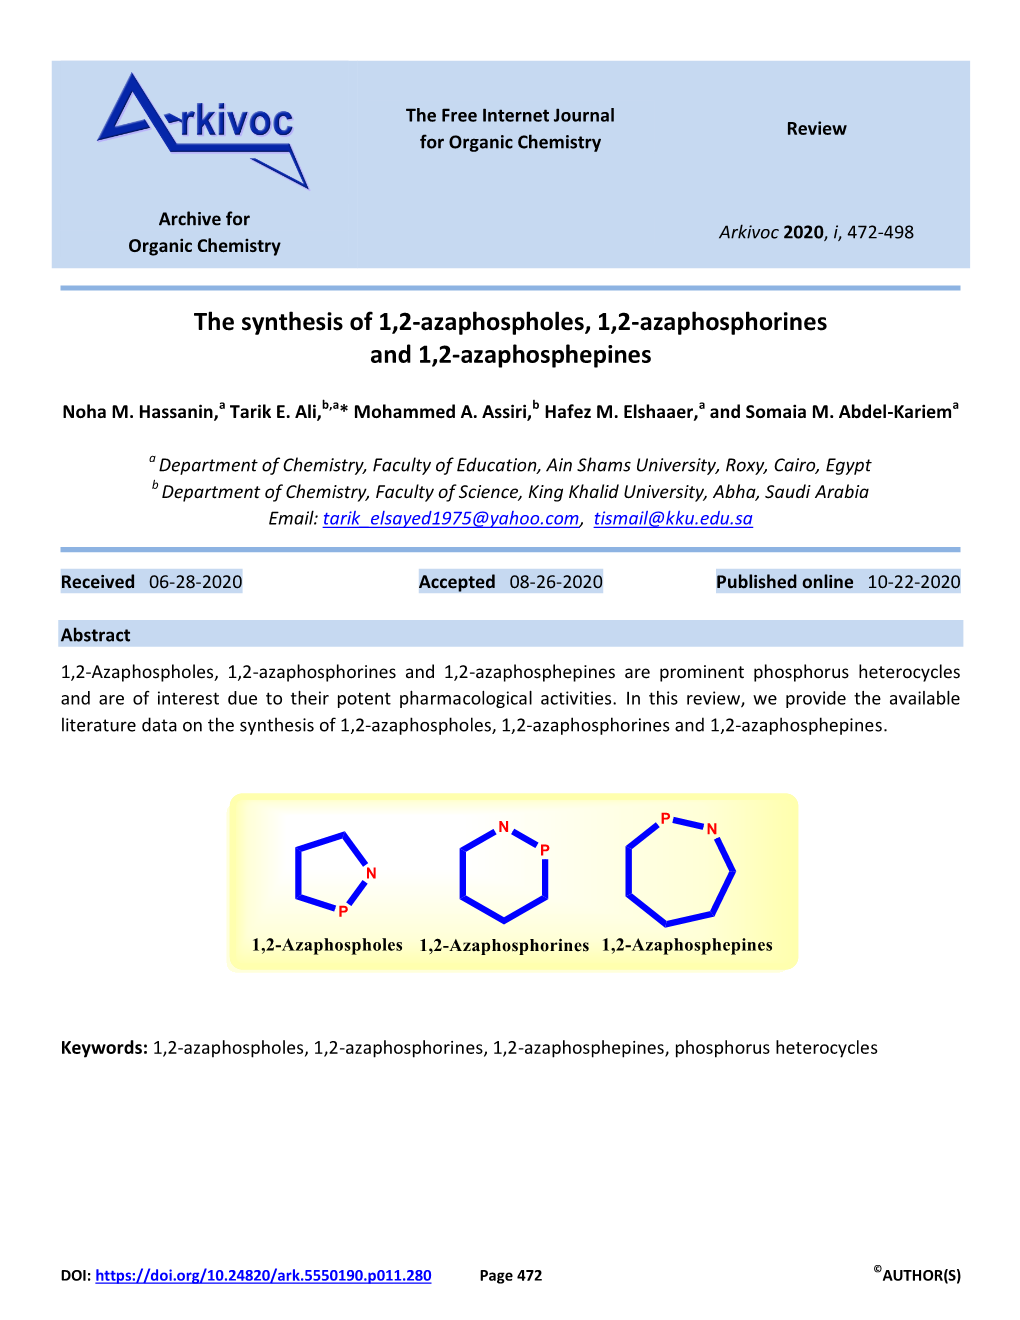 The Synthesis of 1,2-Azaphospholes, 1,2-Azaphosphorines and 1,2-Azaphosphepines